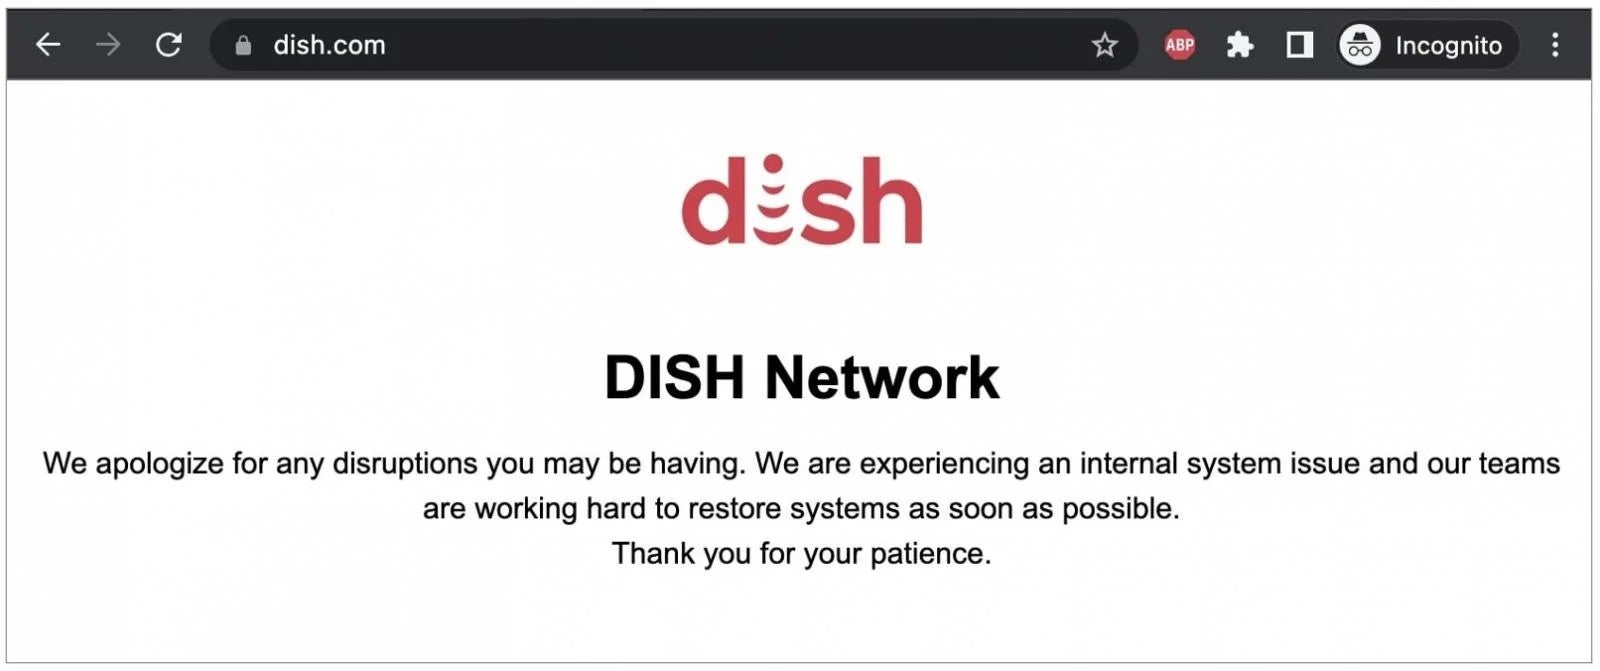 dish_com-screenshot_image